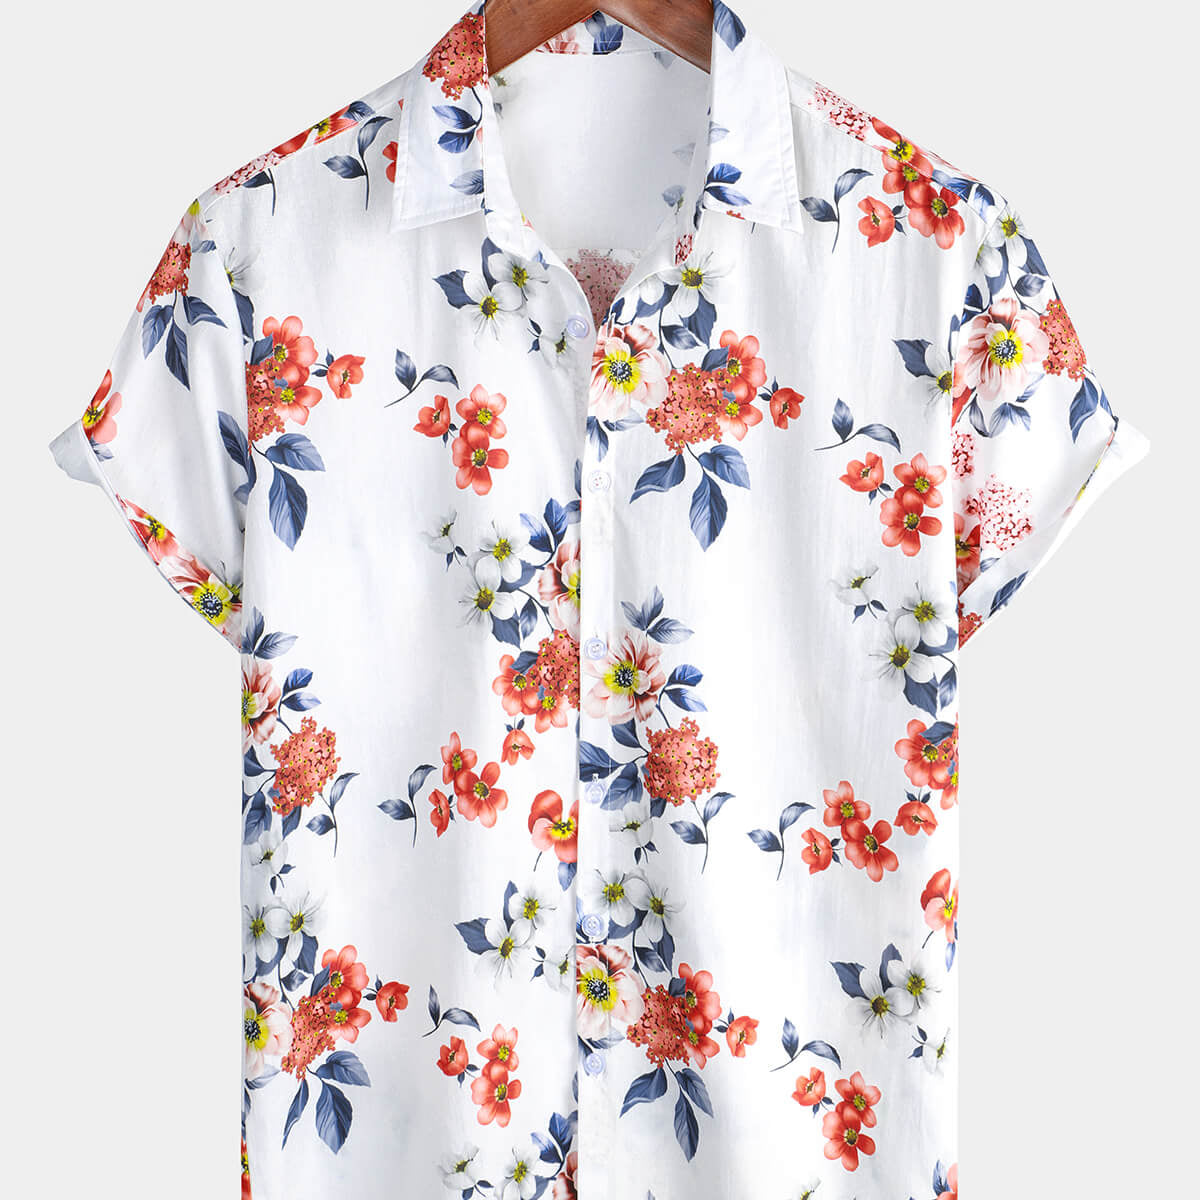 Men's Floral White Hawaiian Cotton Beach Holiday Short Sleeve Shirt